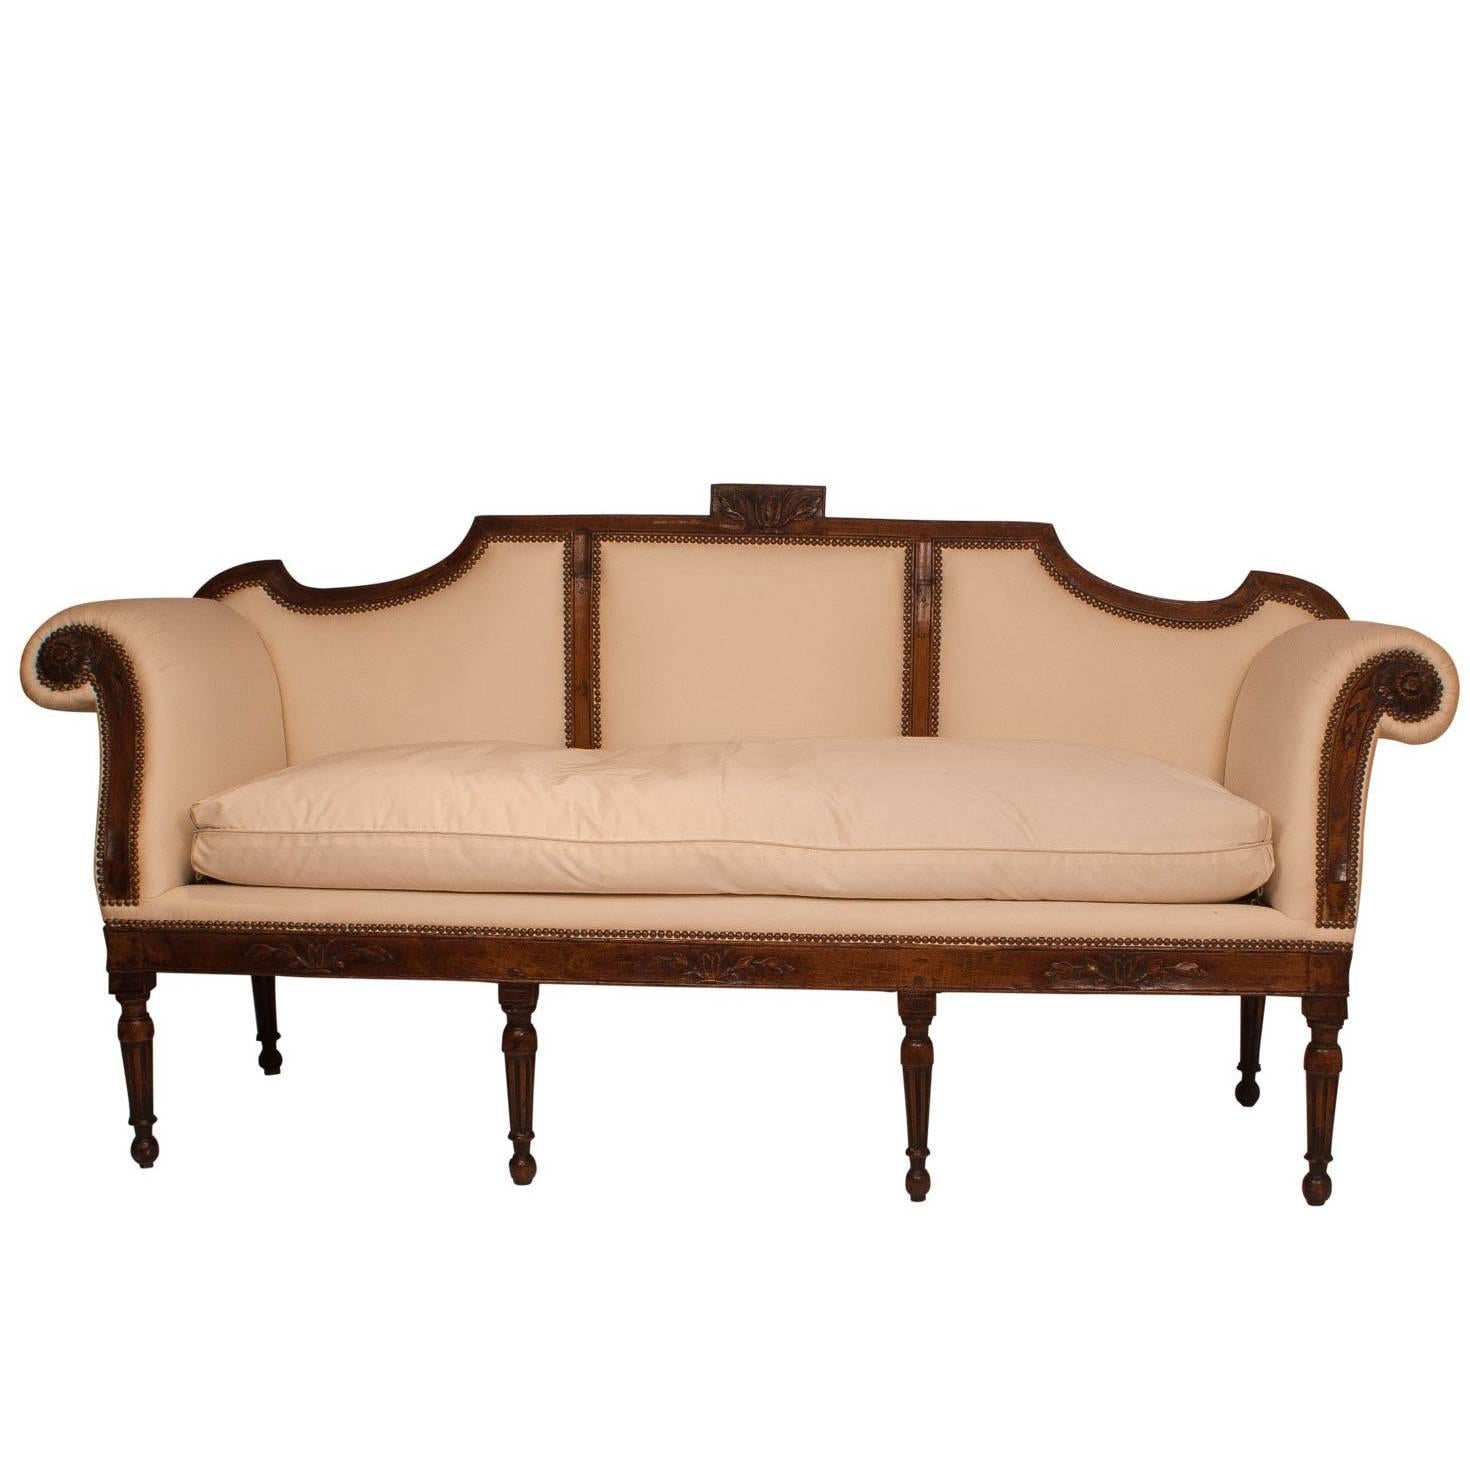 Italian Walnut Neoclassical Sofa, circa 1810